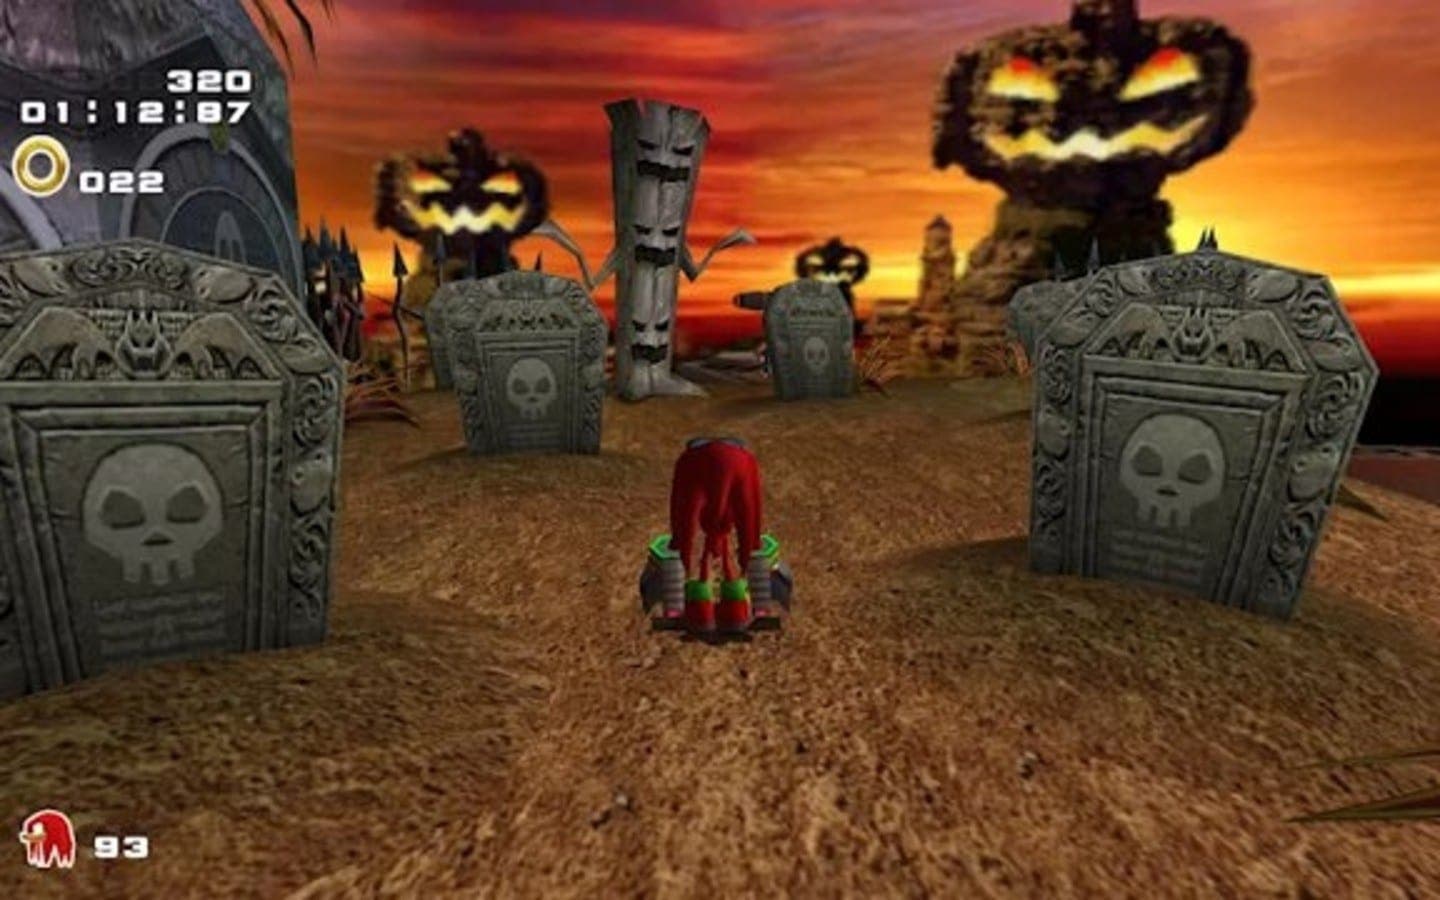 Con motivo de Halloween, Sega ha publicado este vídeo de Pumpkin Hill de diez horas de duración